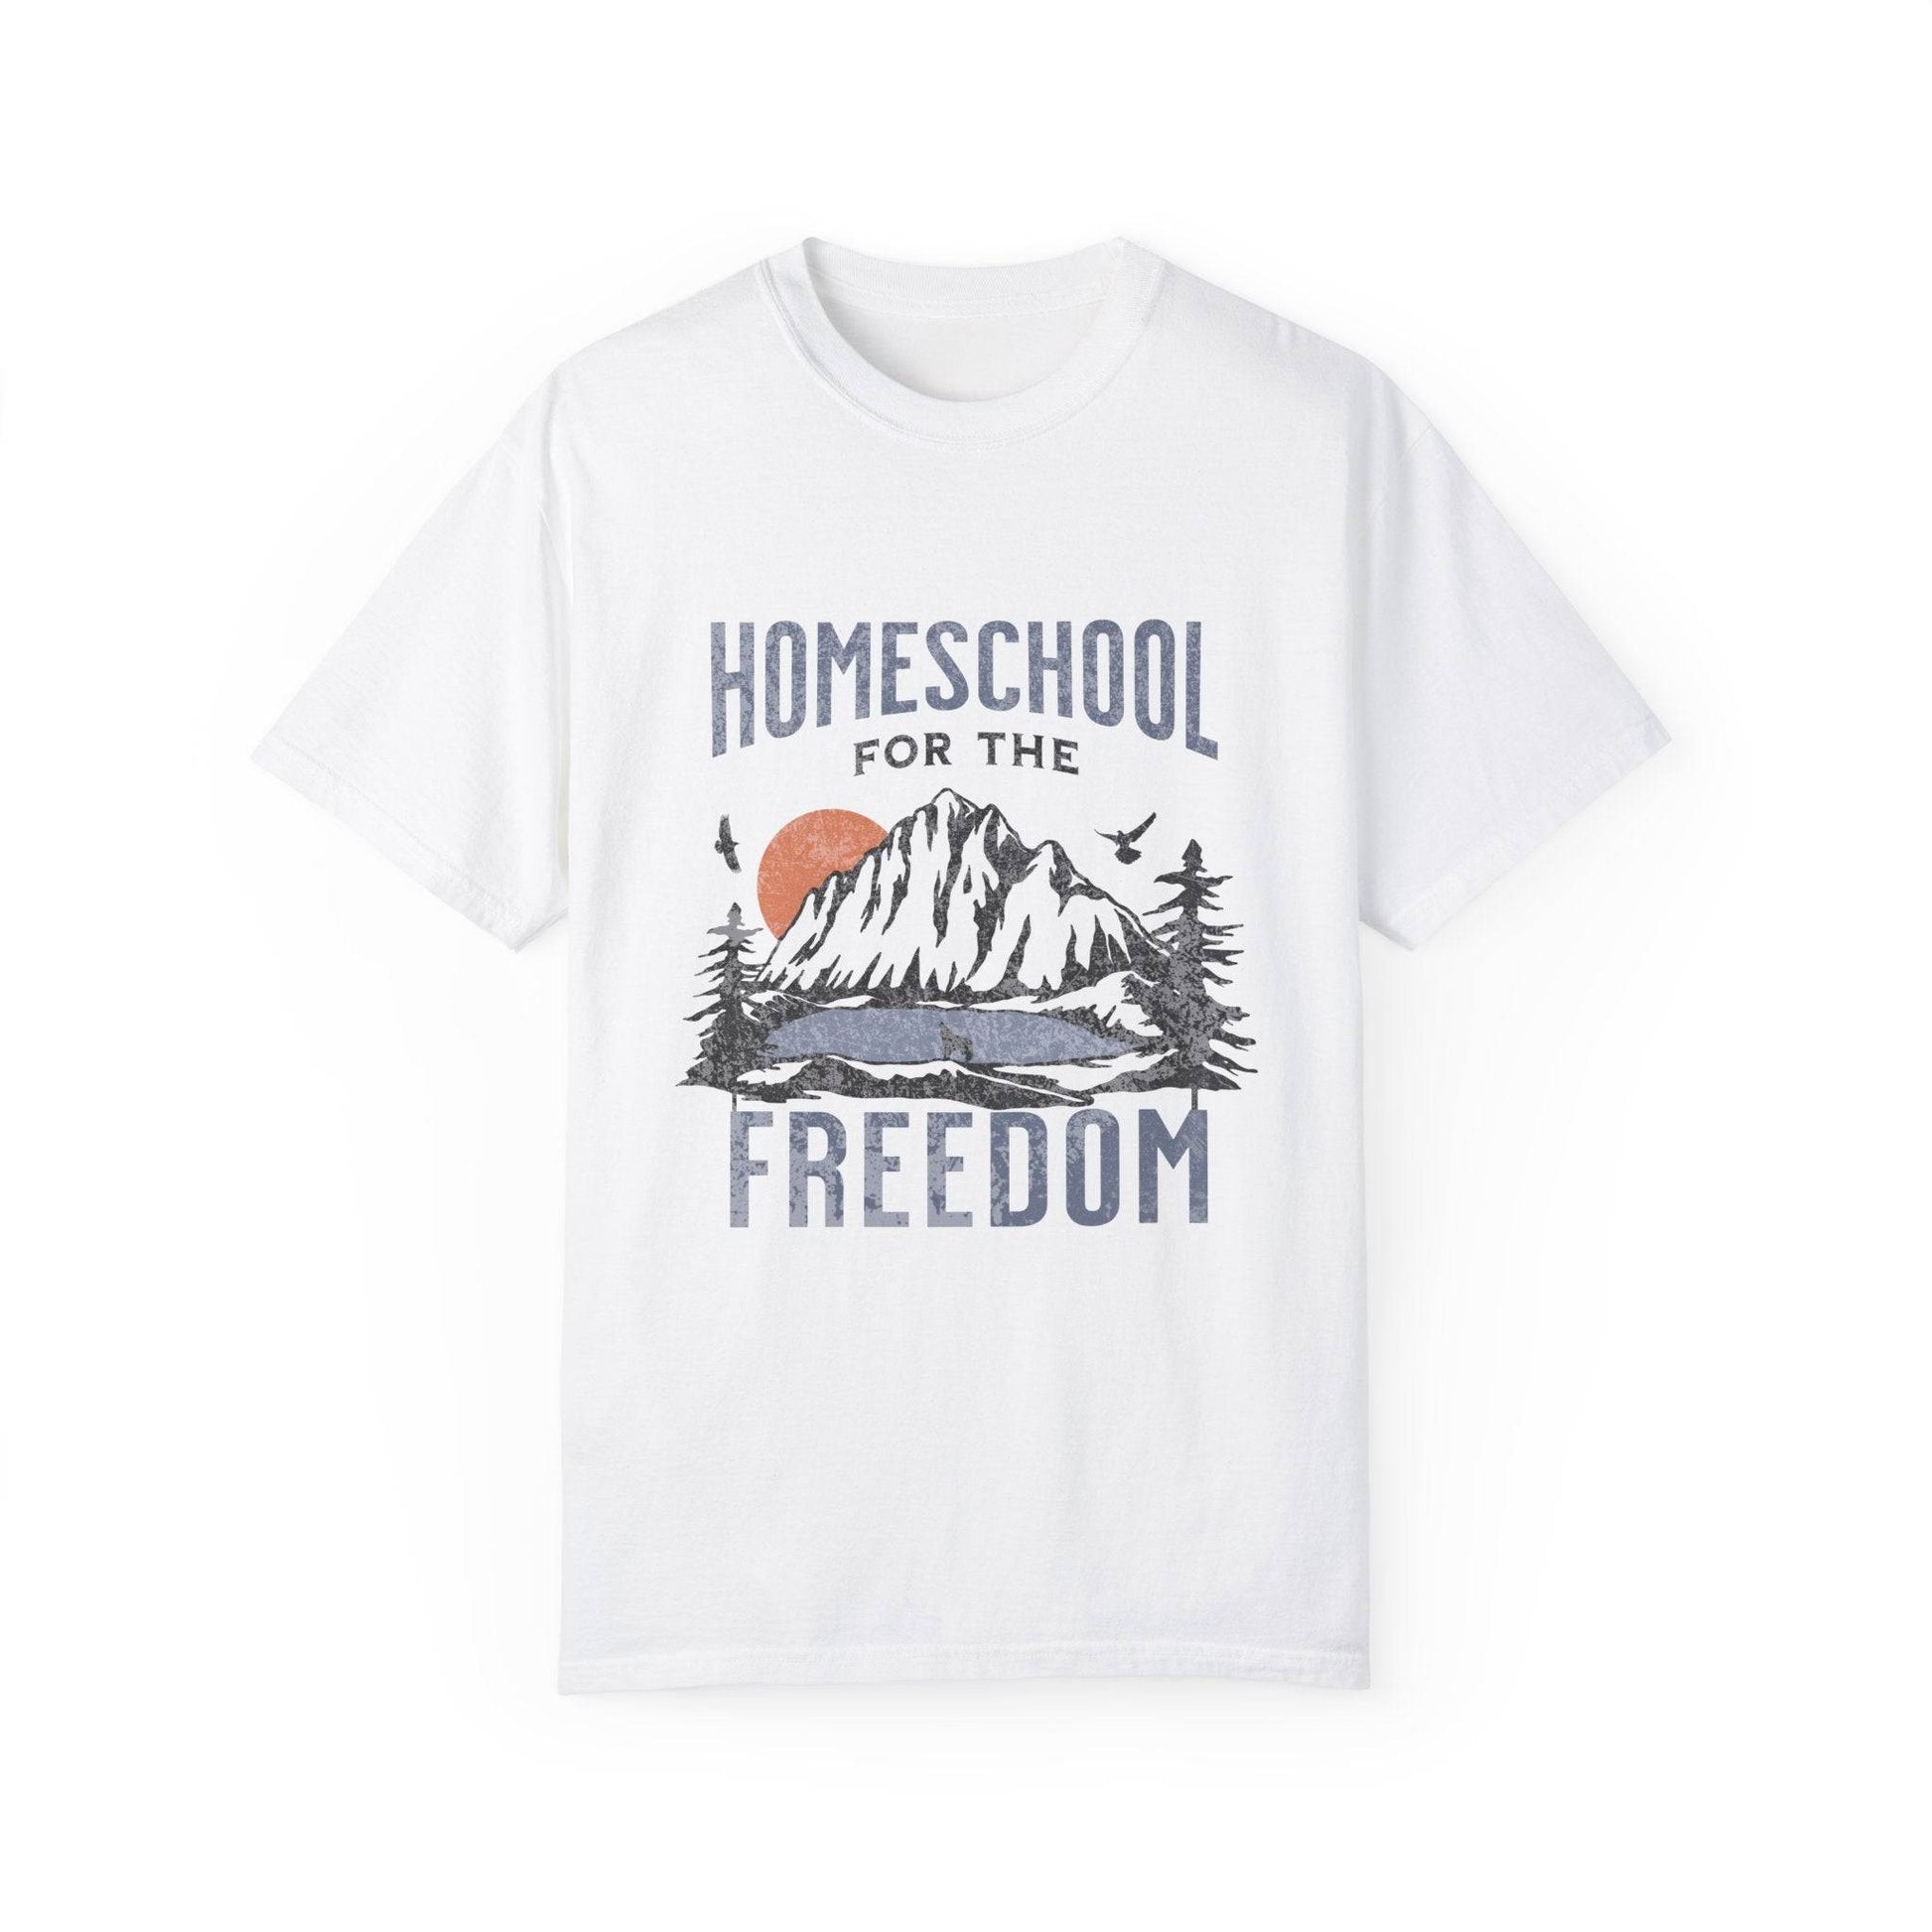 homeschool teenager shirt homeschoool for the freedom